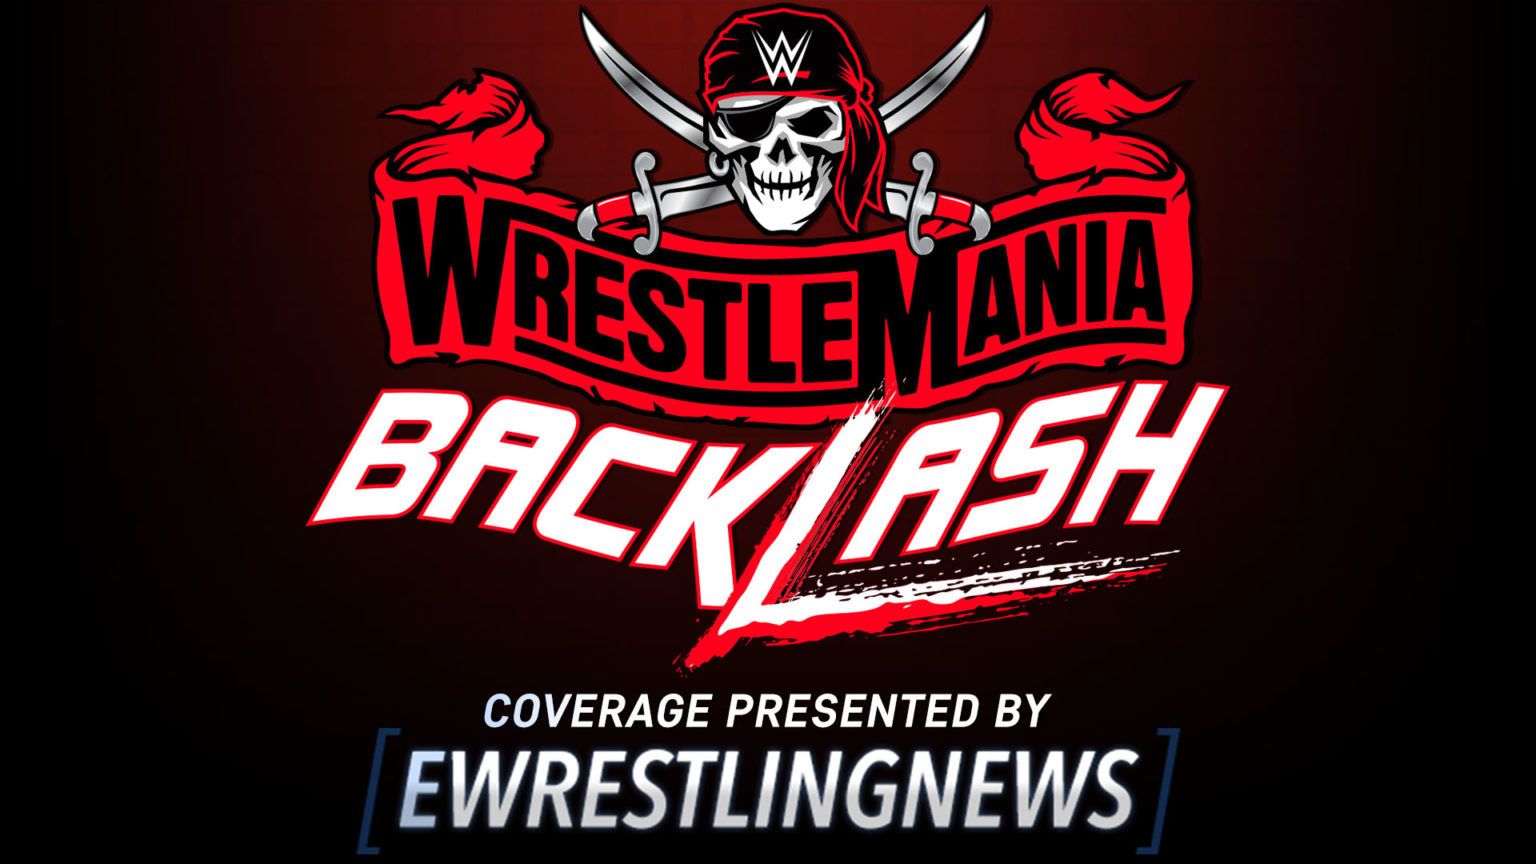 Watch The WWE WrestleMania Backlash Kickoff Show